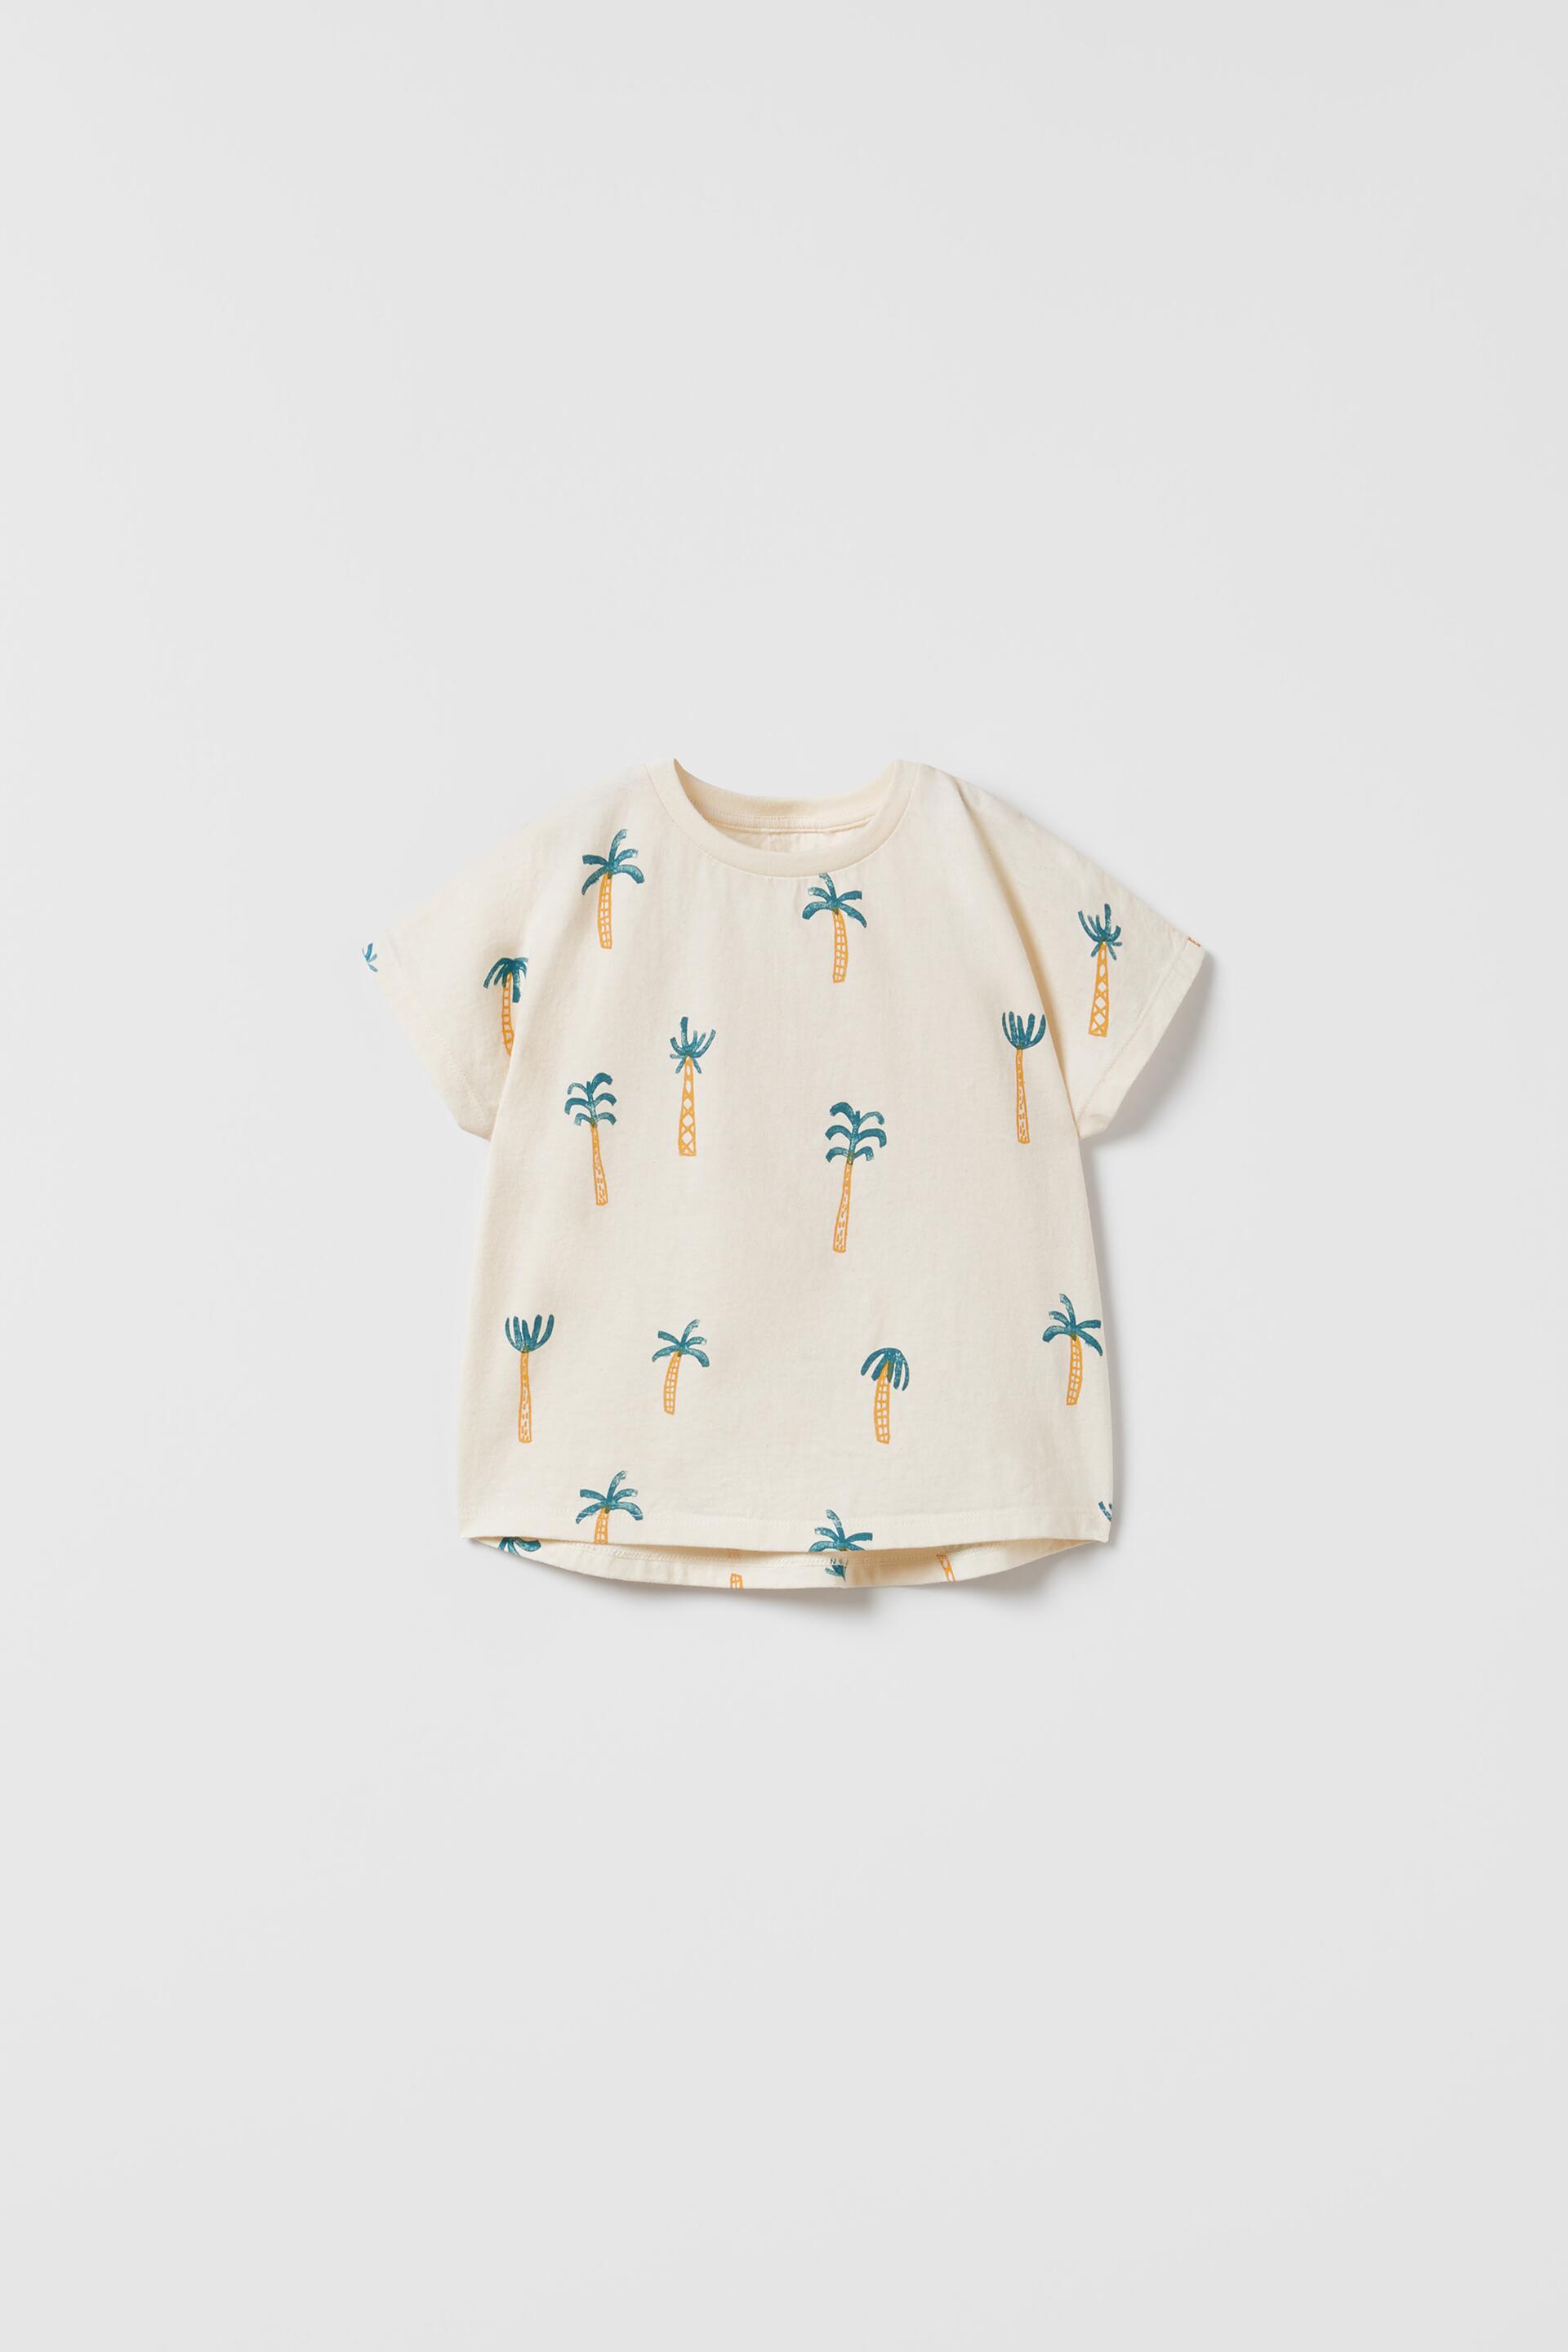 Zara Palm Tree T-Shirt - Big Apple Buddy